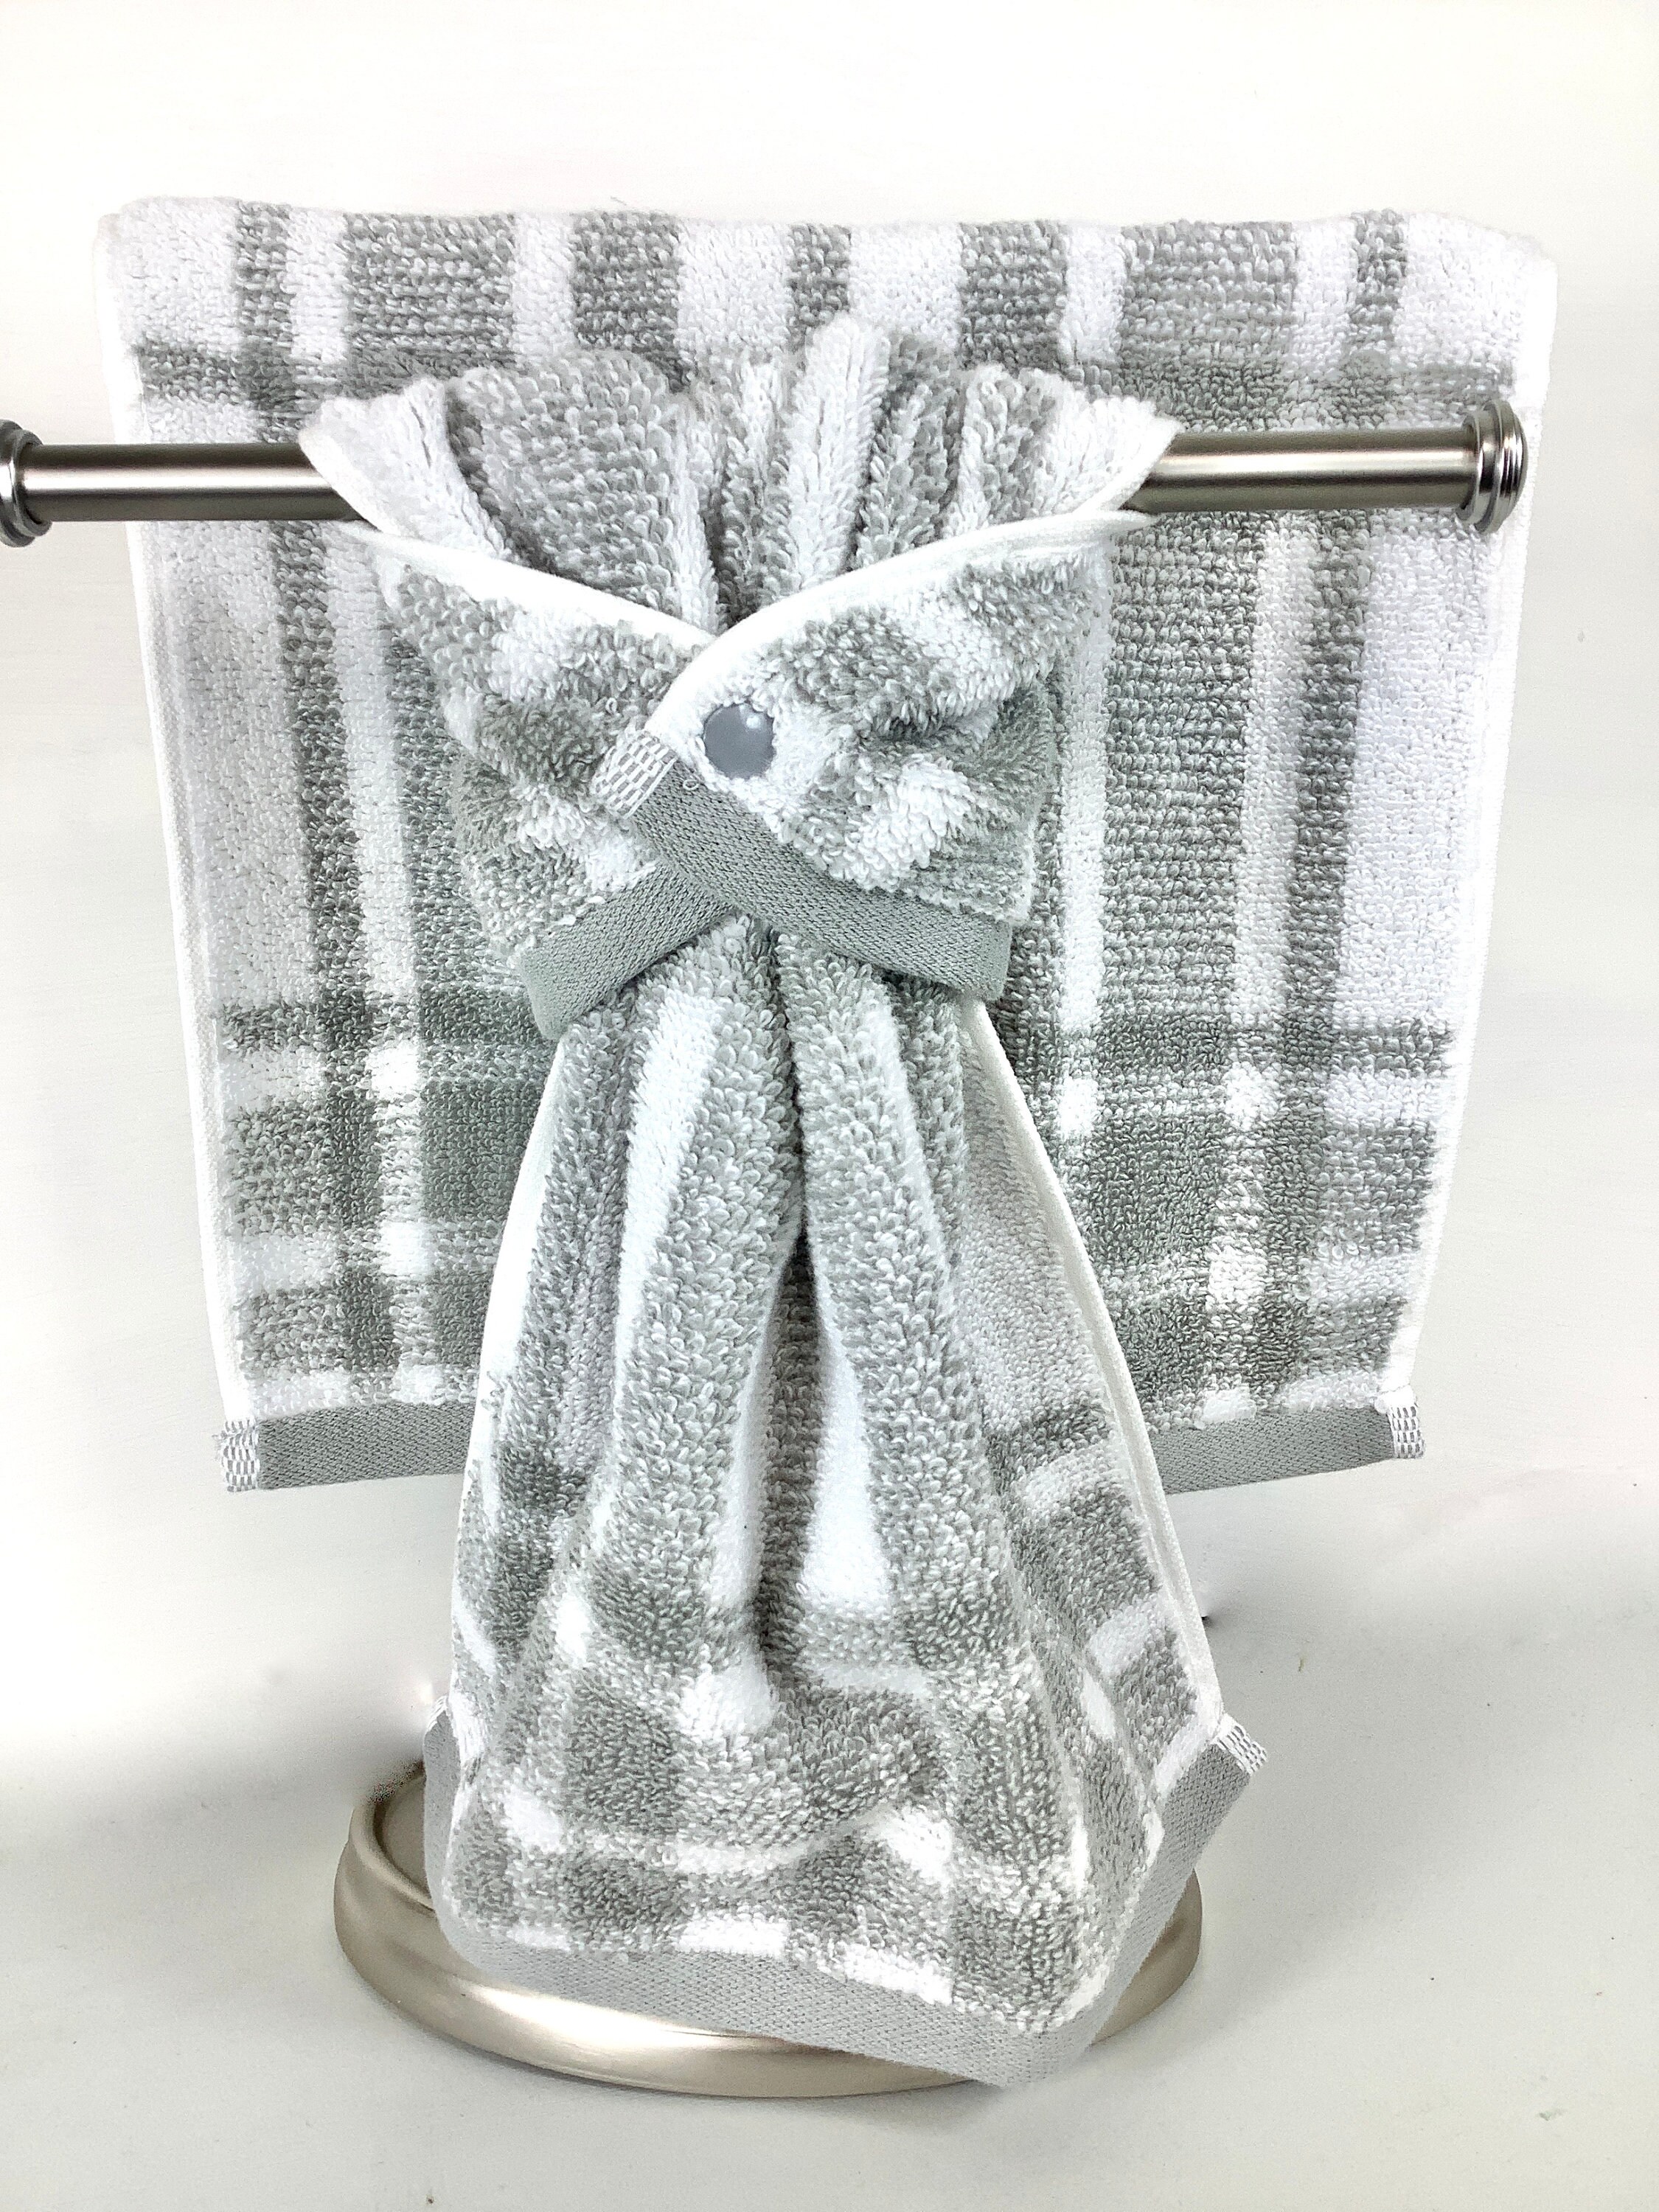 Plaid Hand & Bath Towels to Match Any Bathroom Decor